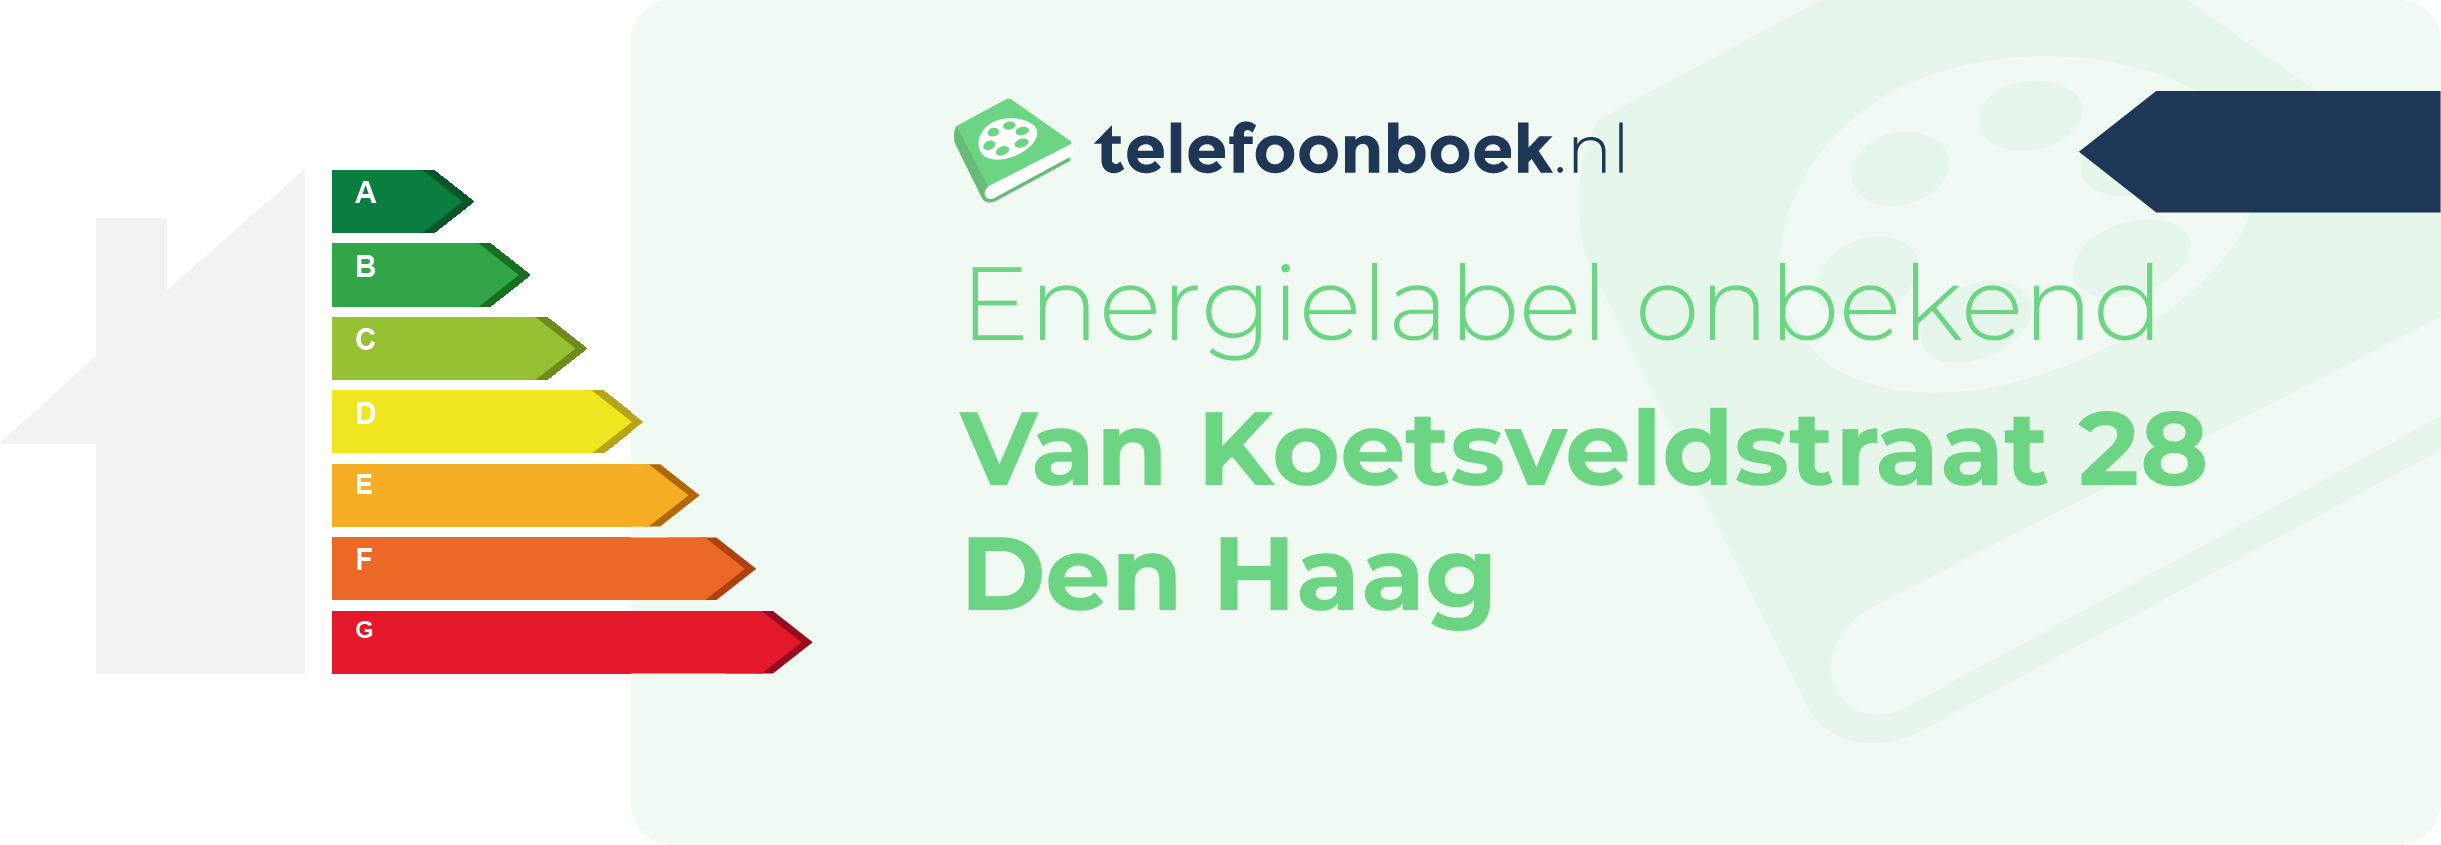 Energielabel Van Koetsveldstraat 28 Den Haag